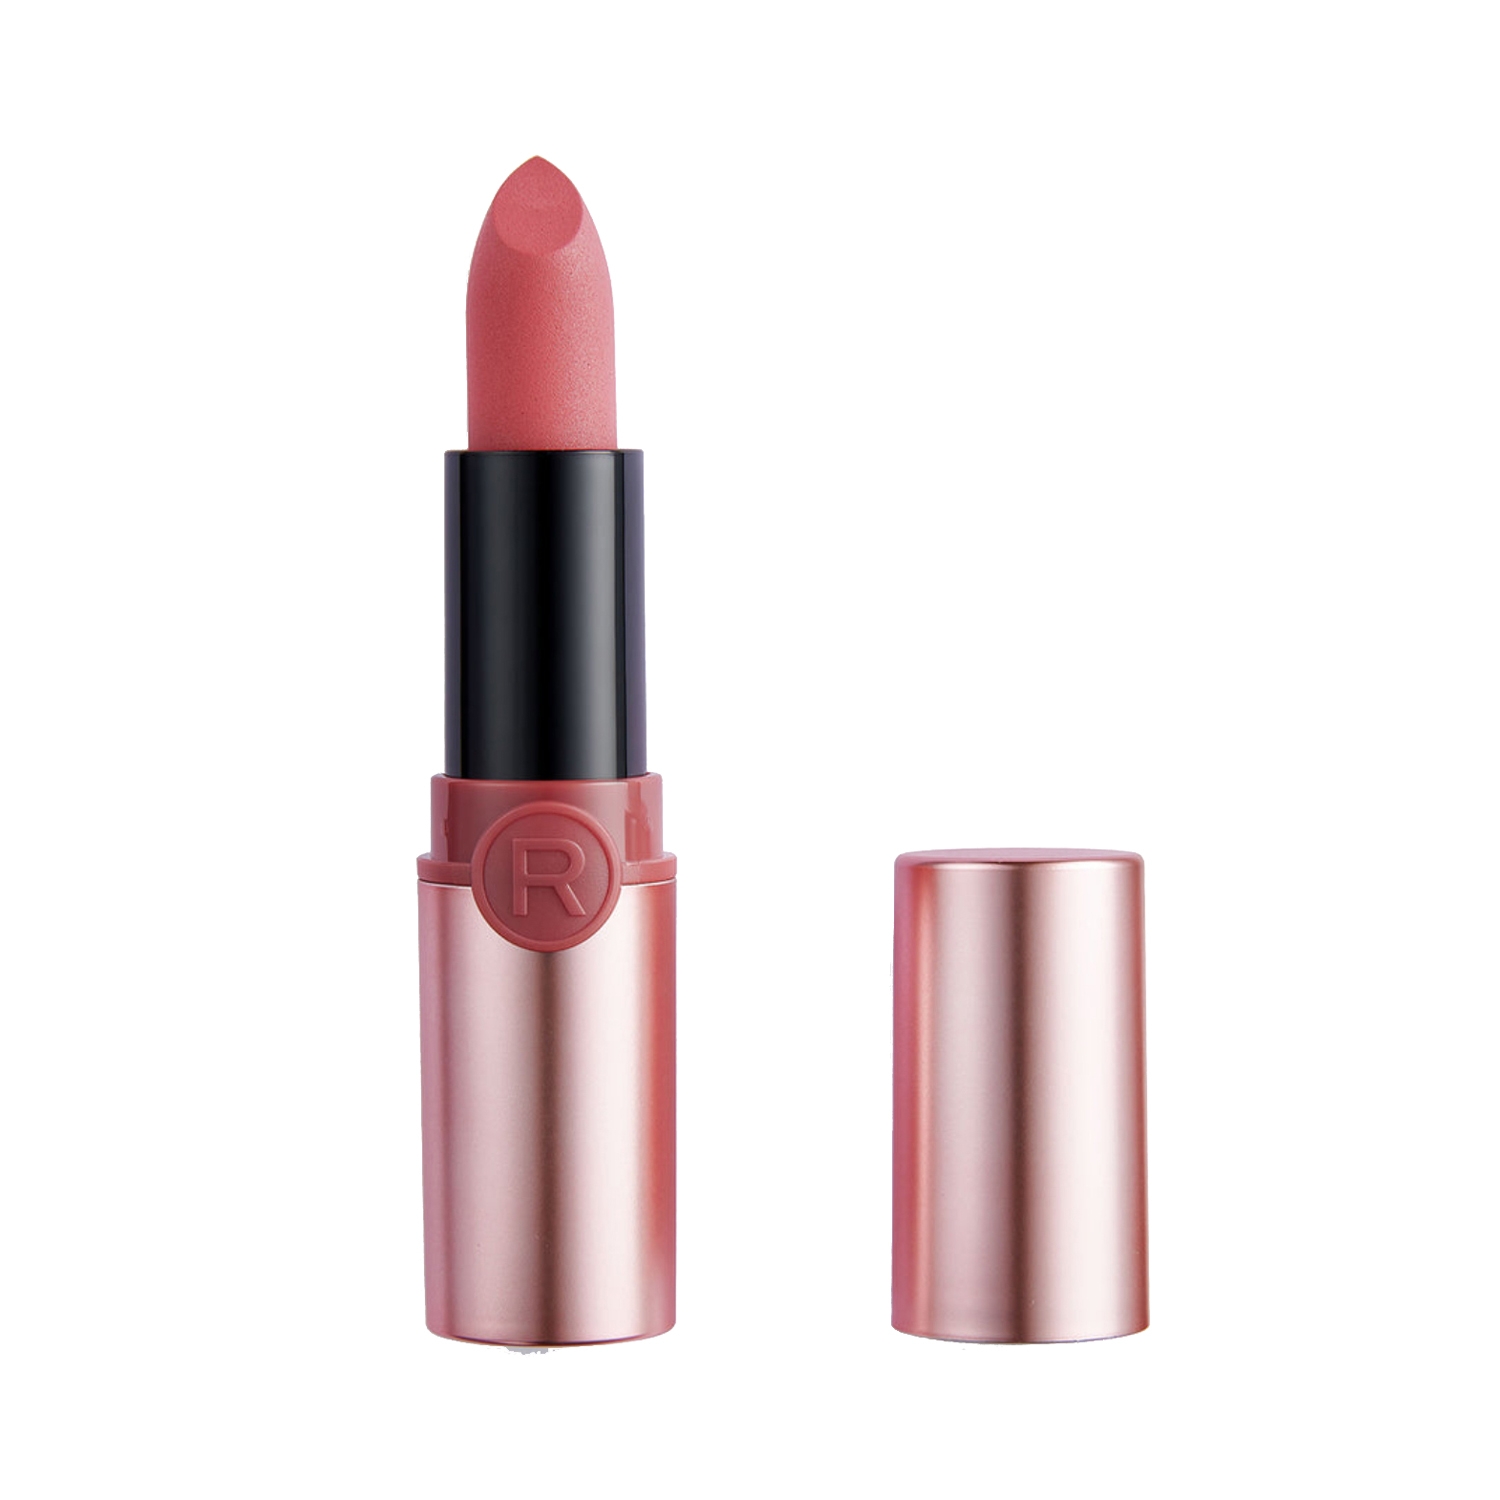 Makeup Revolution Powder Matte Lipstick - Rosy (3.5g)